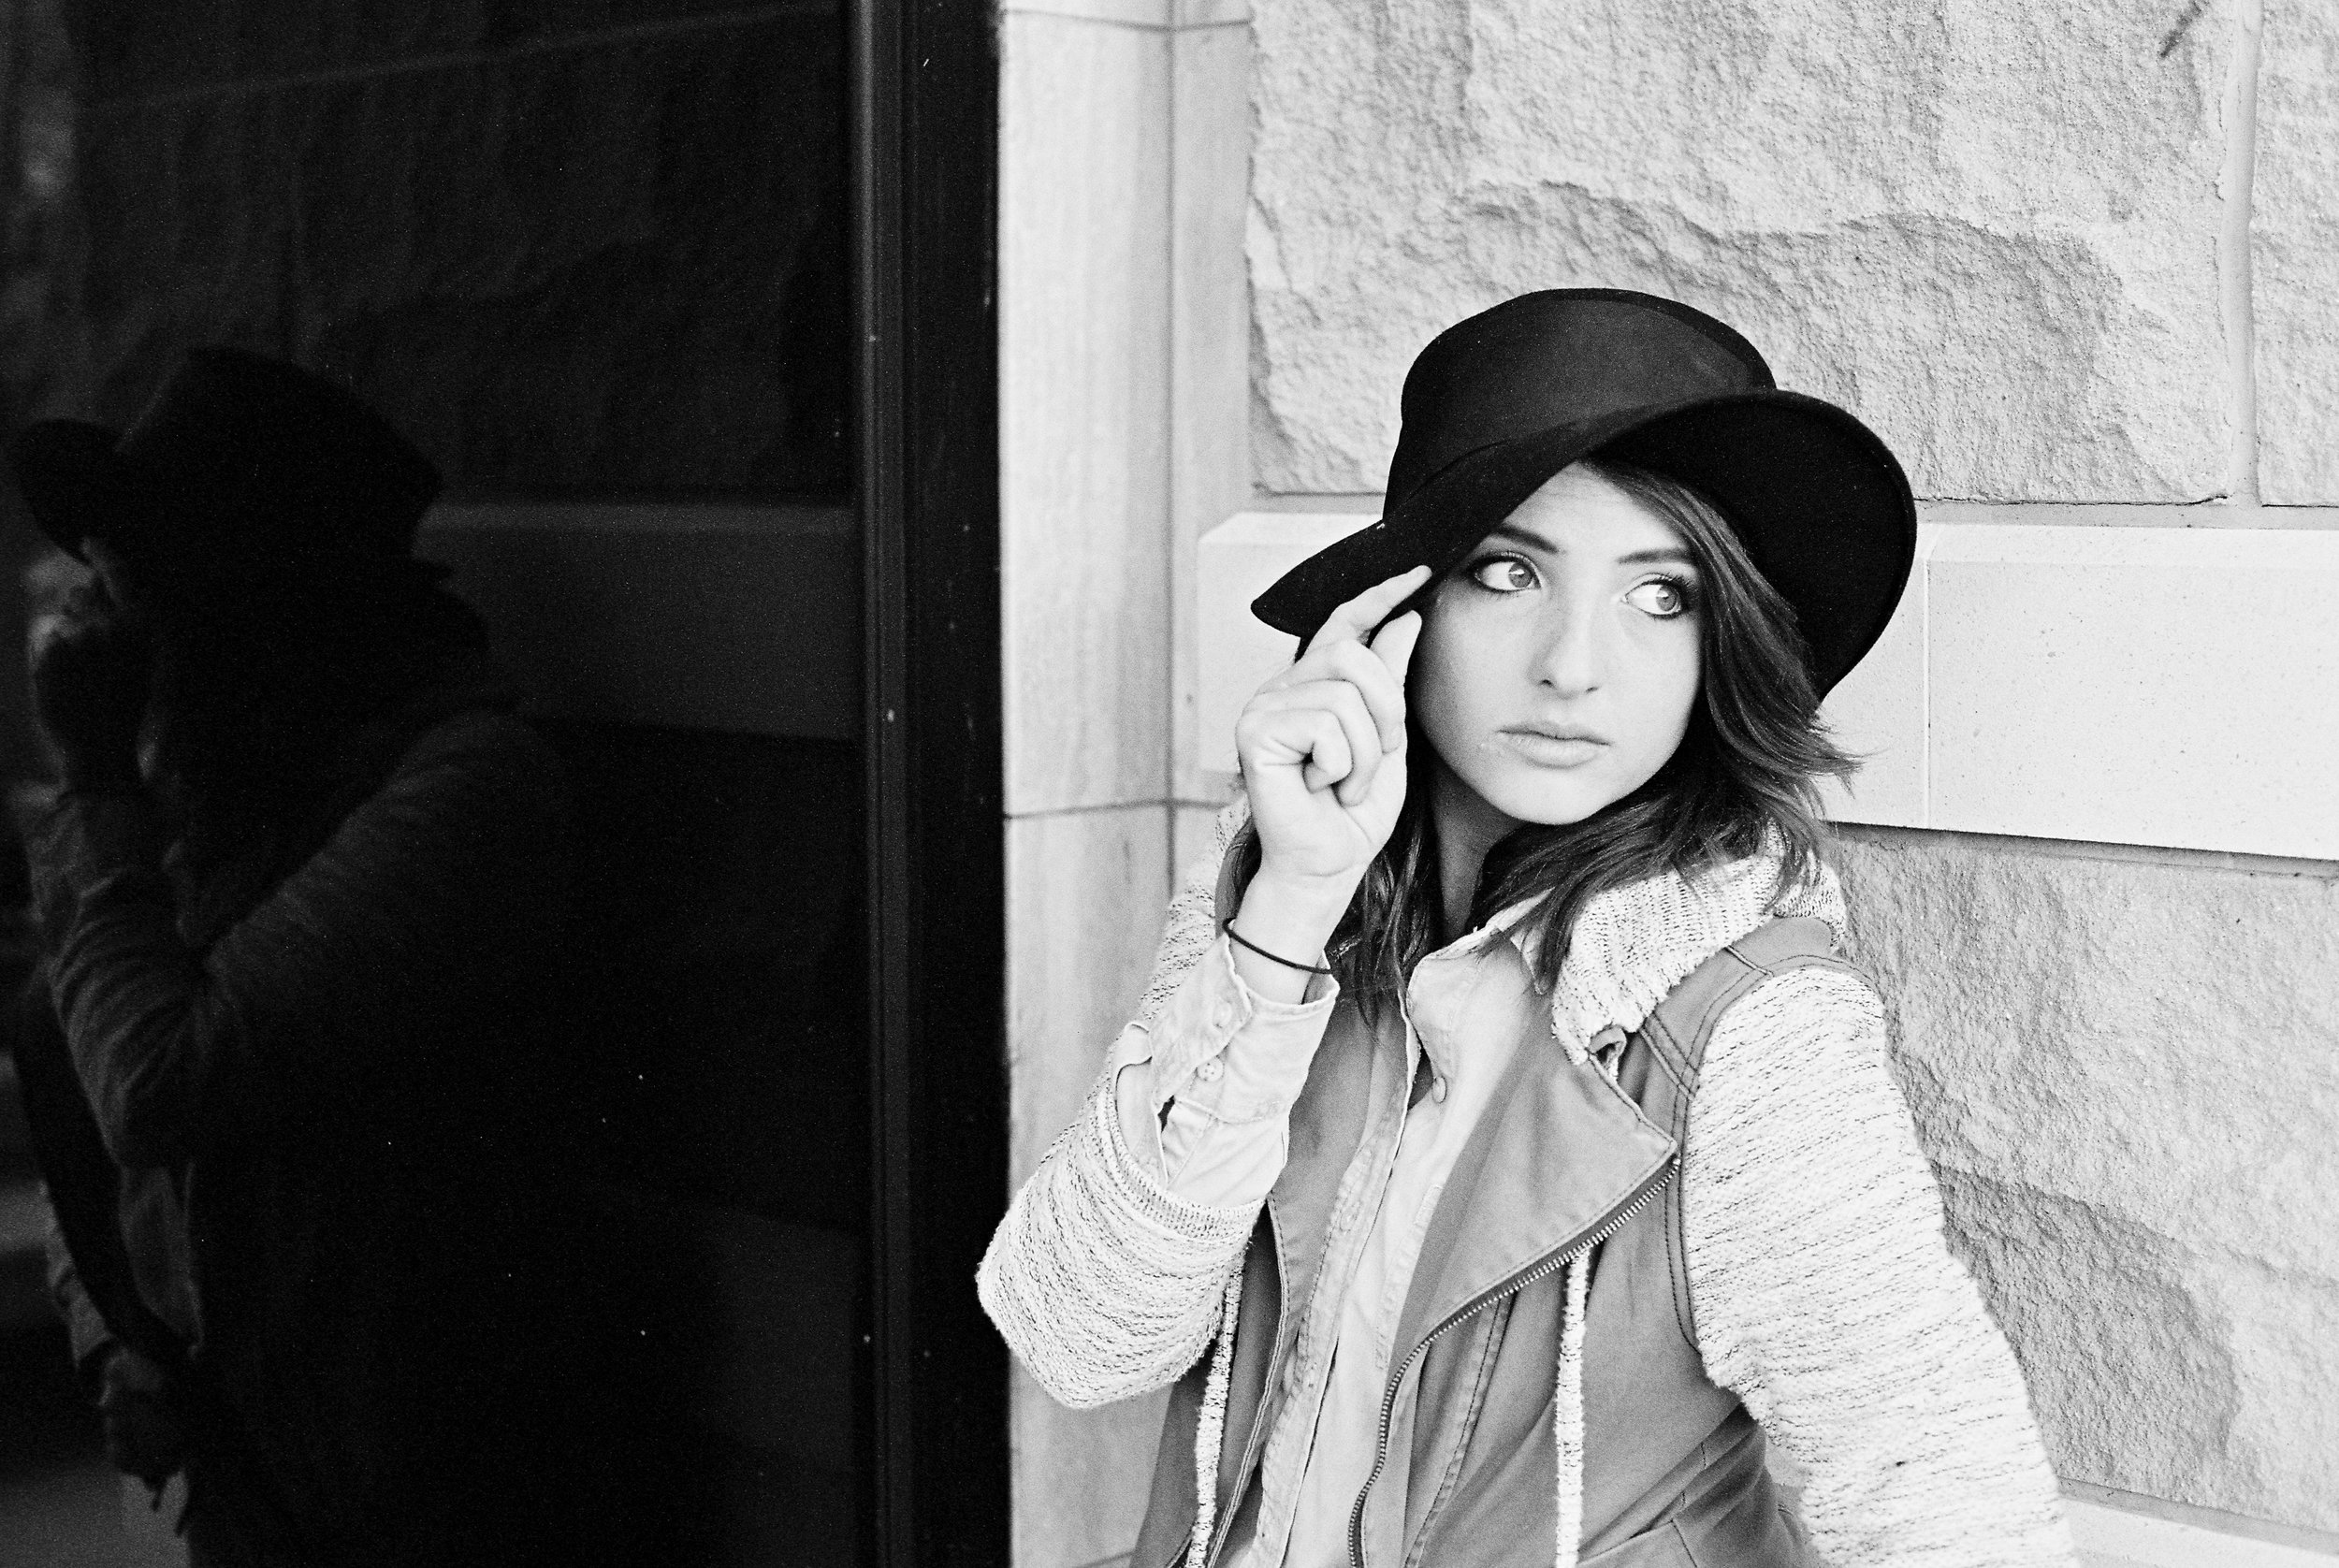 Urban portraits on black and white film